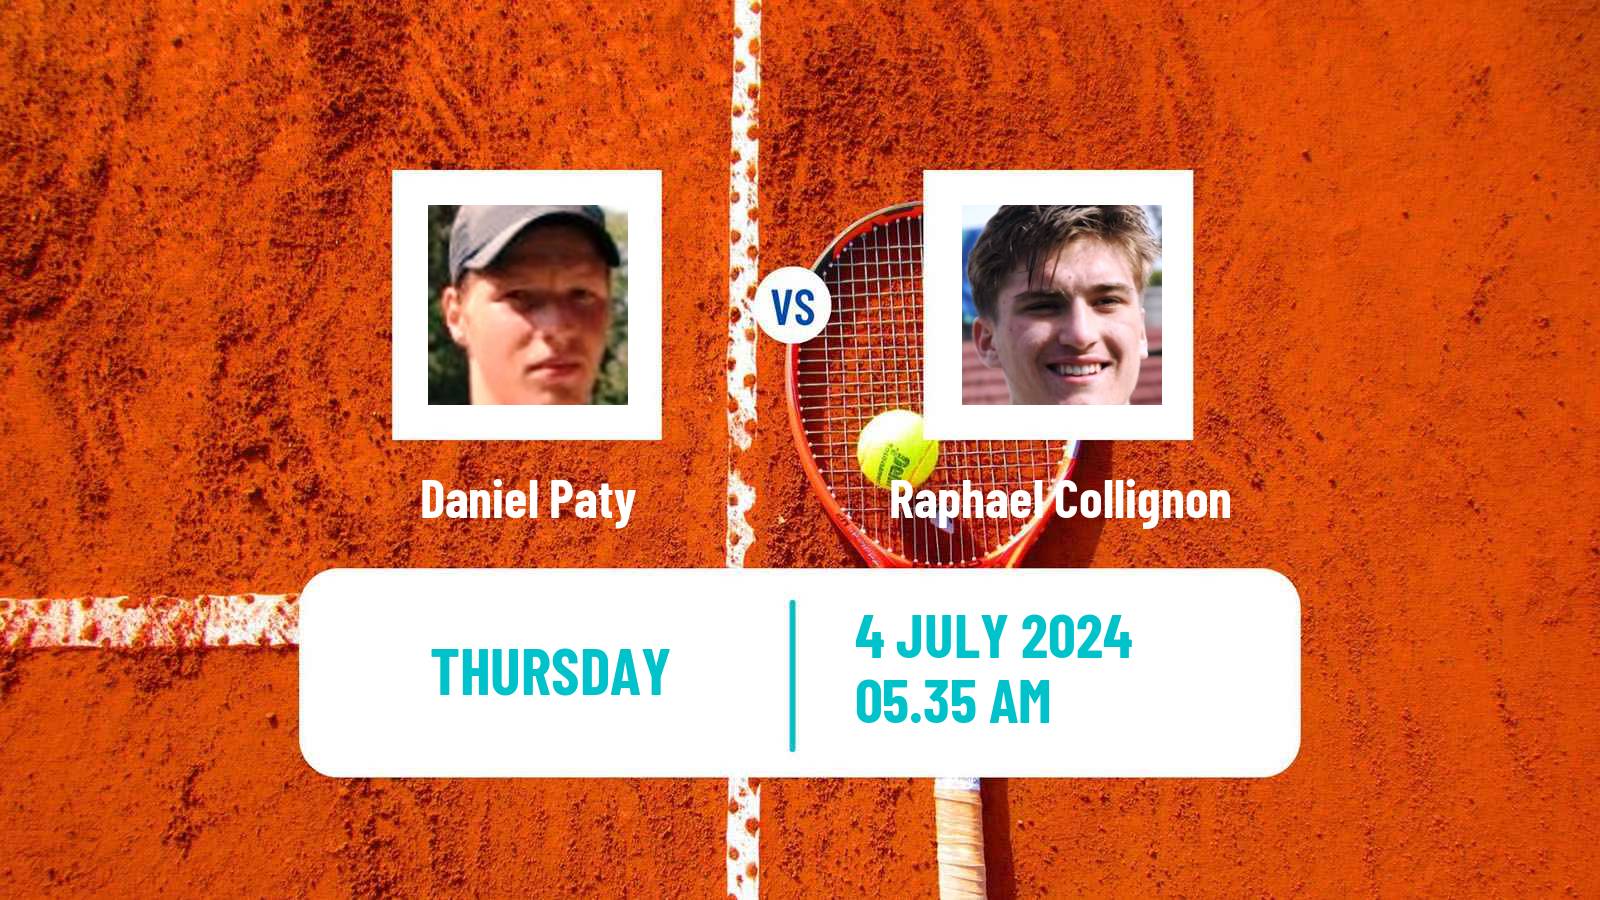 Tennis ITF M25 Marburg Men Daniel Paty - Raphael Collignon